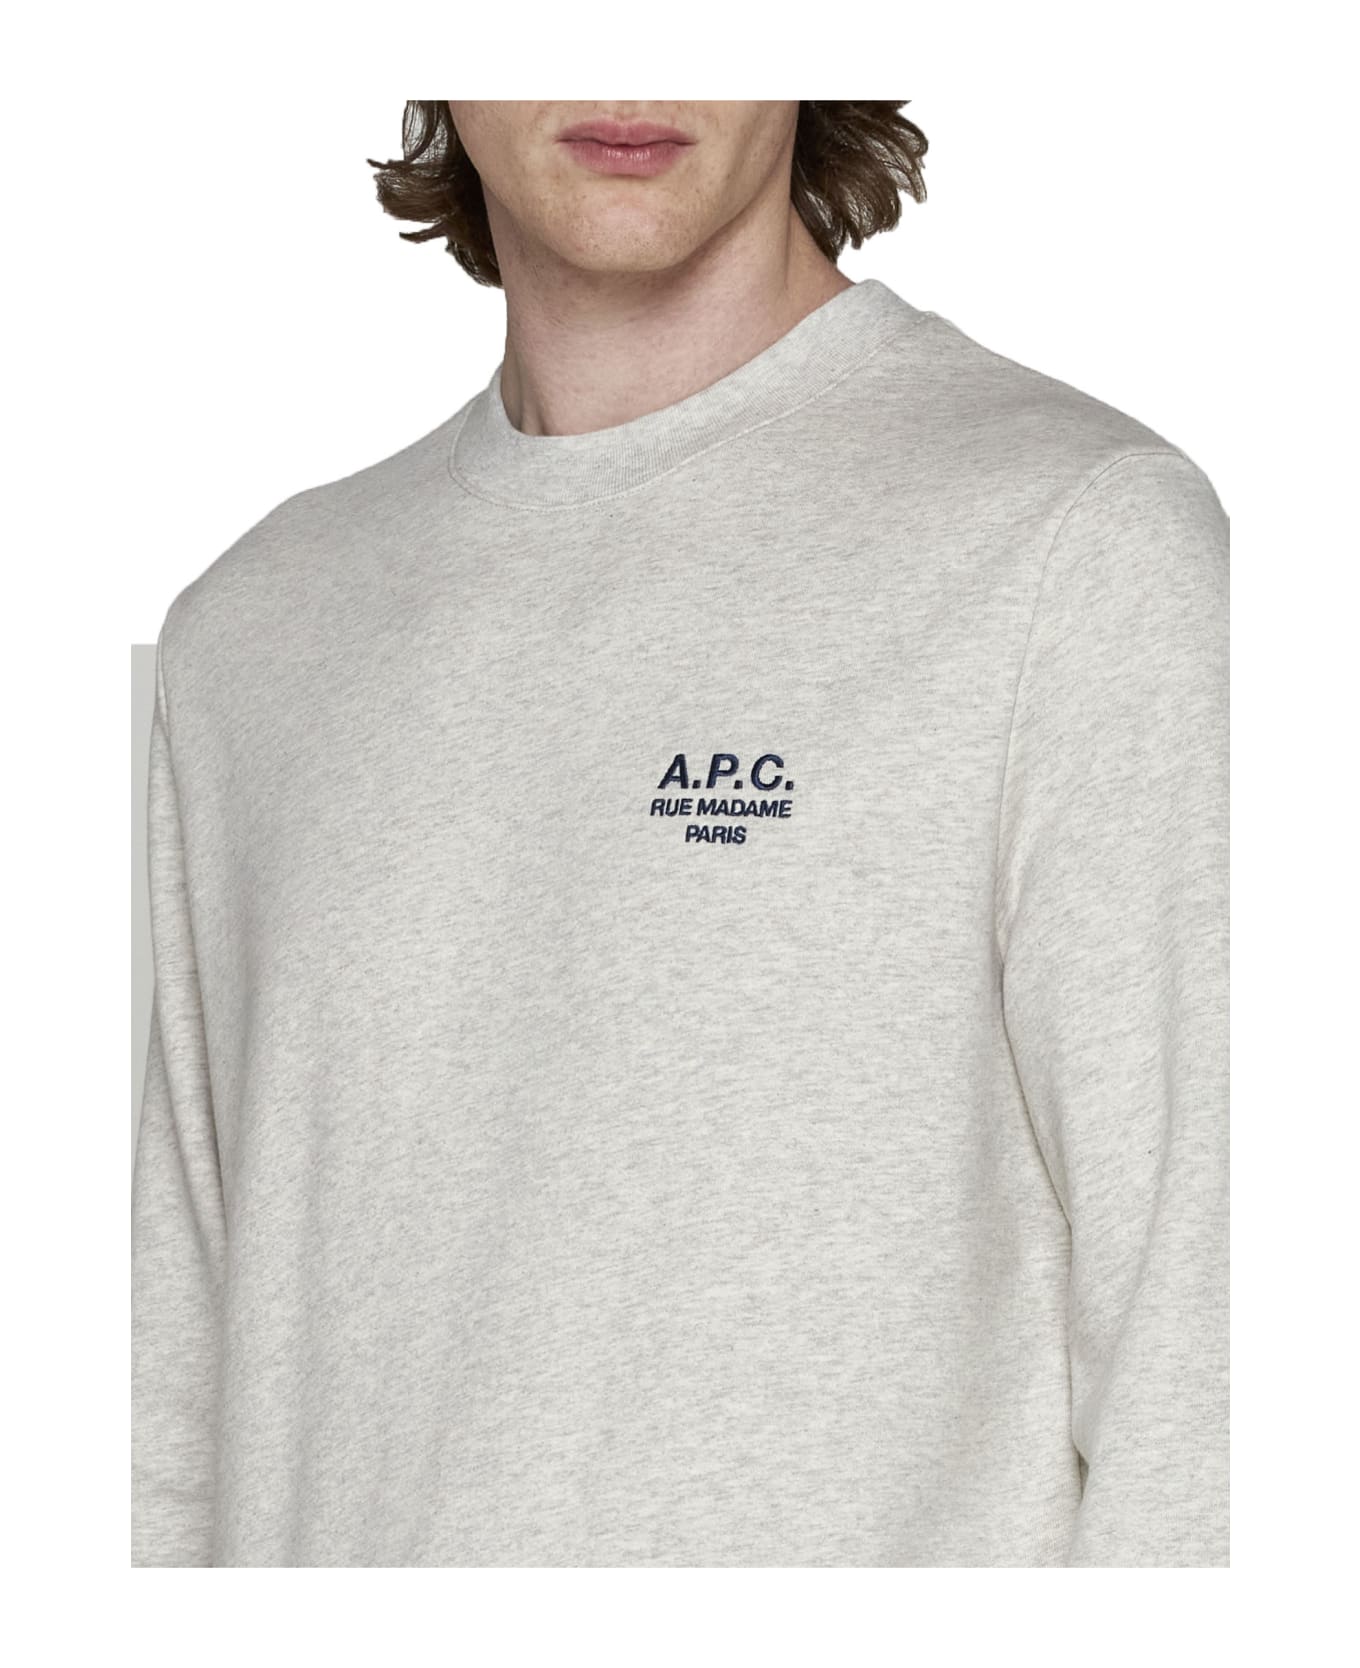 A.P.C. Rider Sweatshirt - Grey